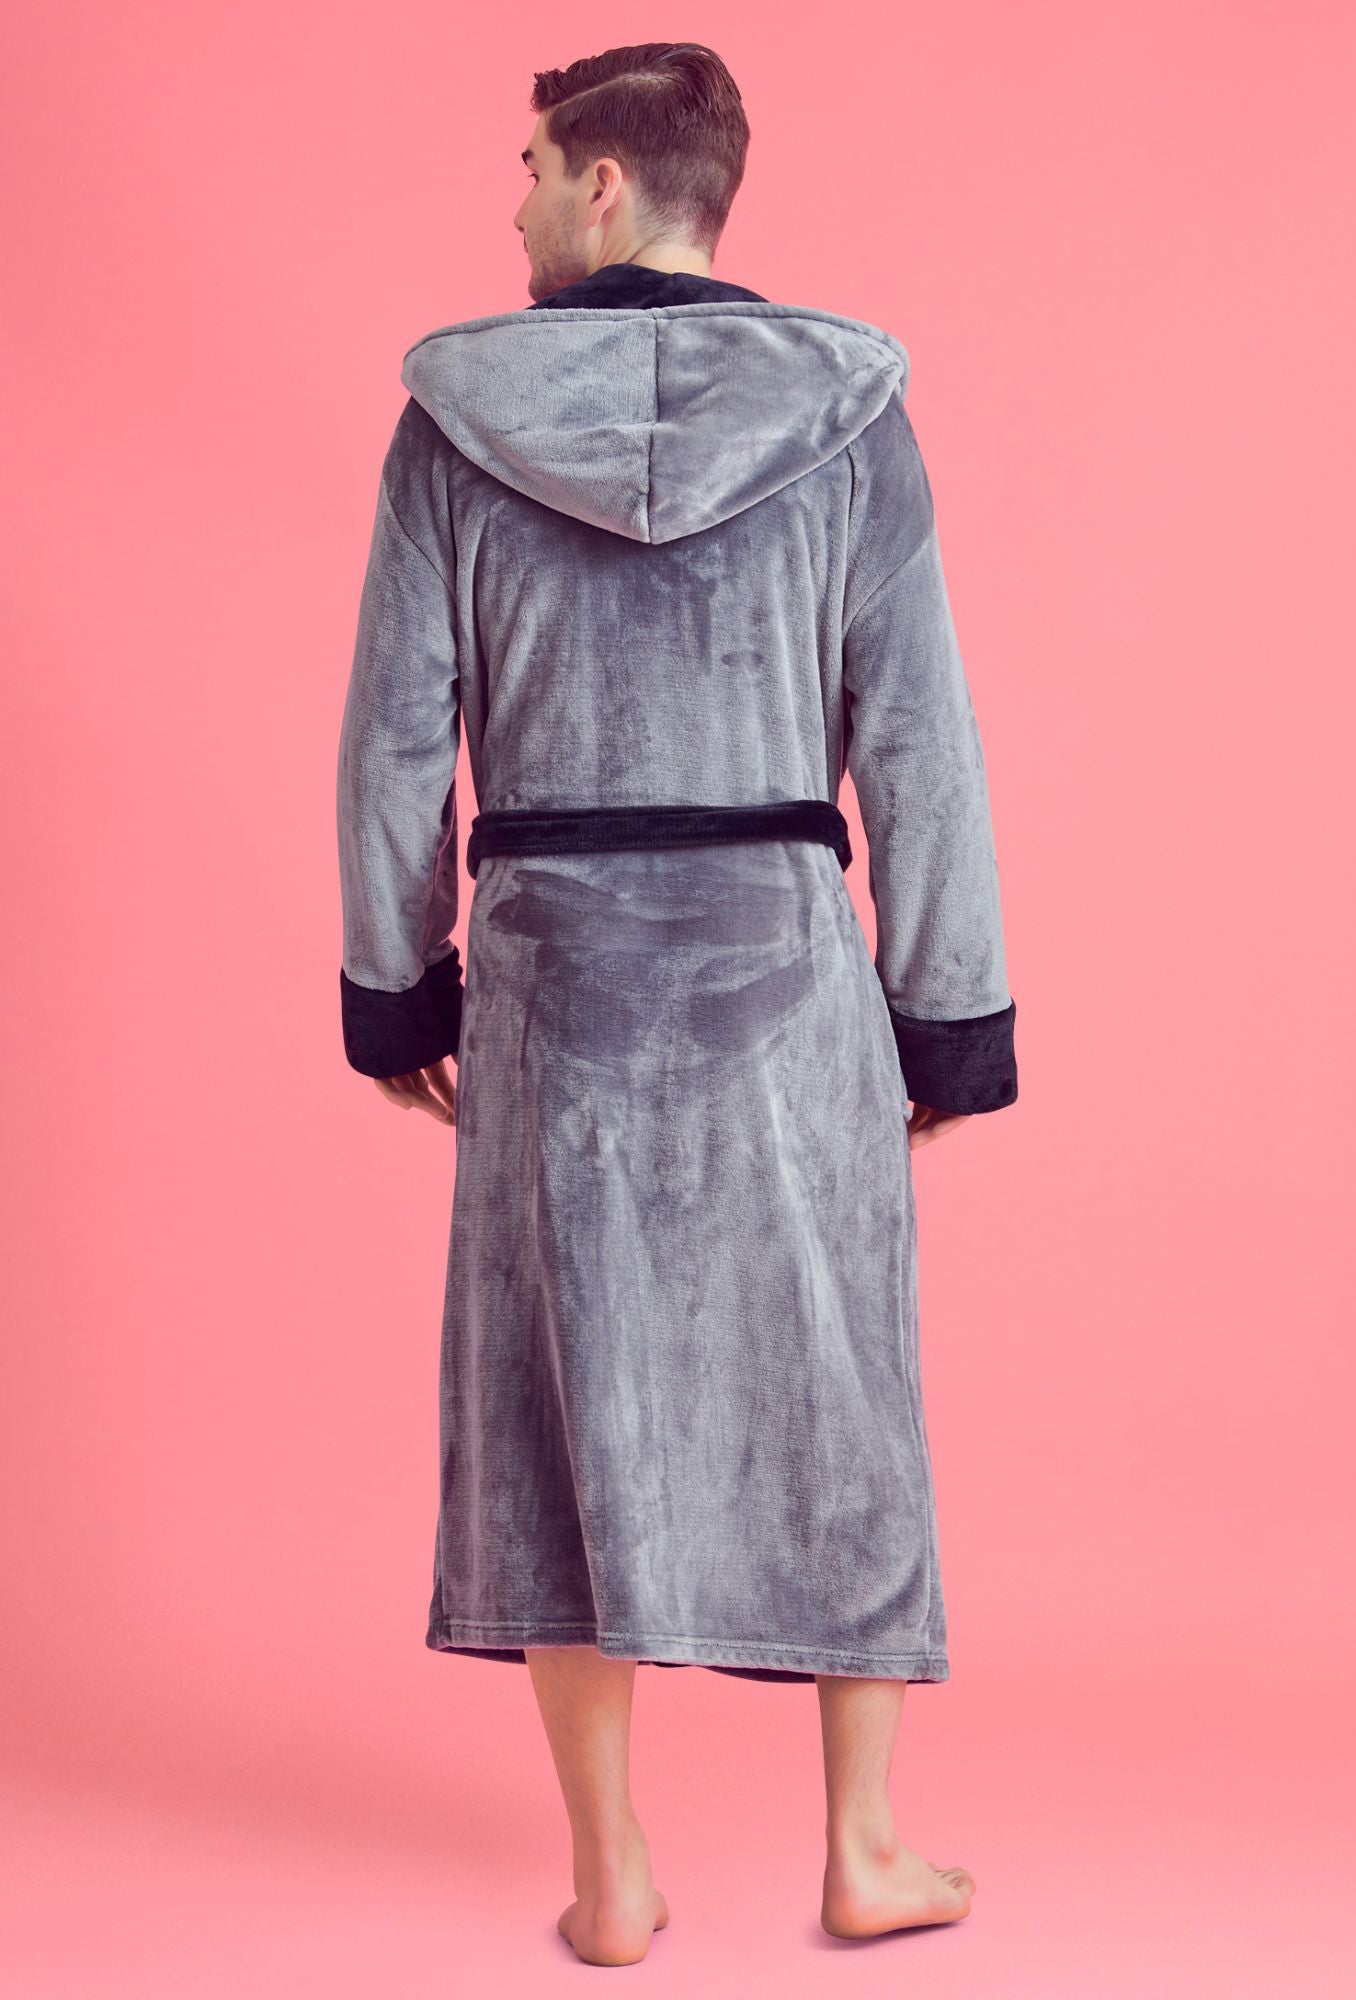 Arus Mens Hood'n Full Ankle Length Hooded Turkish Cotton Bath Robe Black,  Medium at Amazon Men's Clothing store: Robe